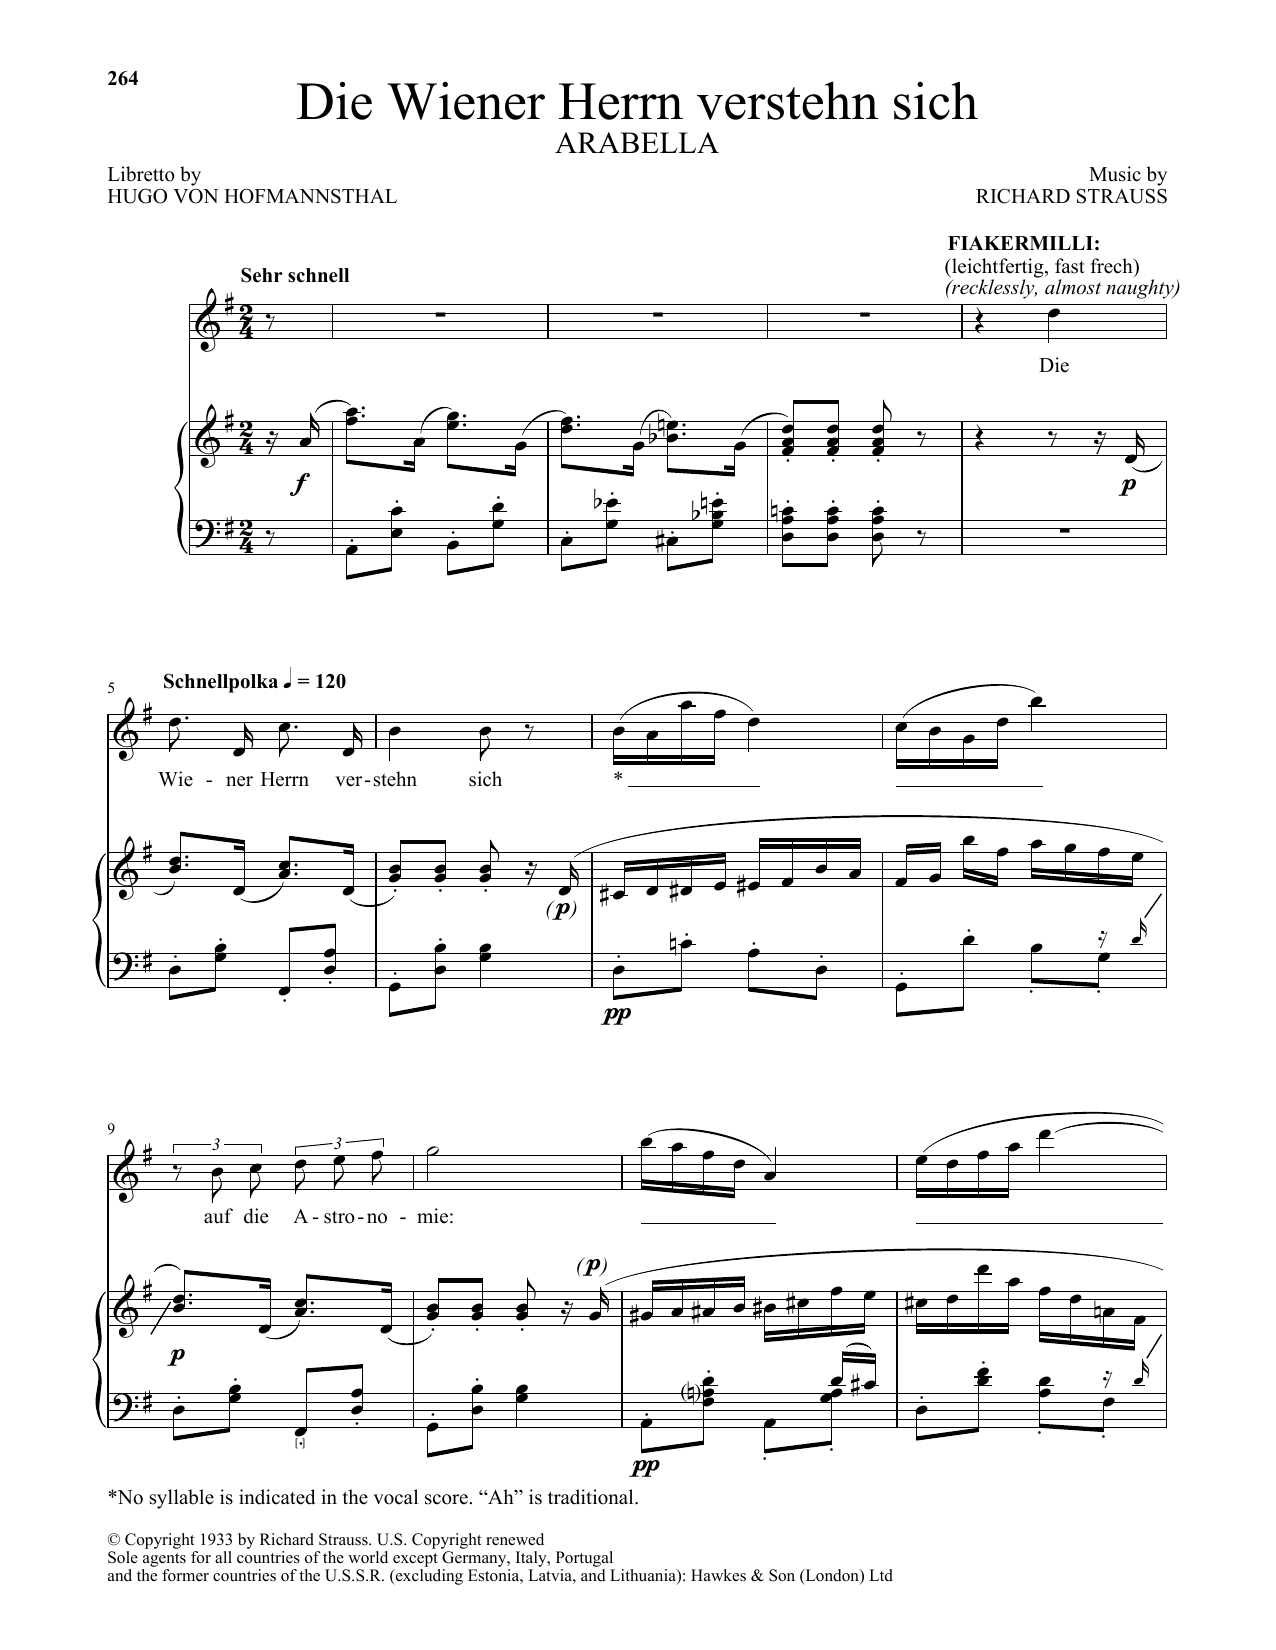 Richard Strauss Die Wiener Herrn Verstehn Sich (from Arabella) sheet music notes and chords arranged for Piano & Vocal